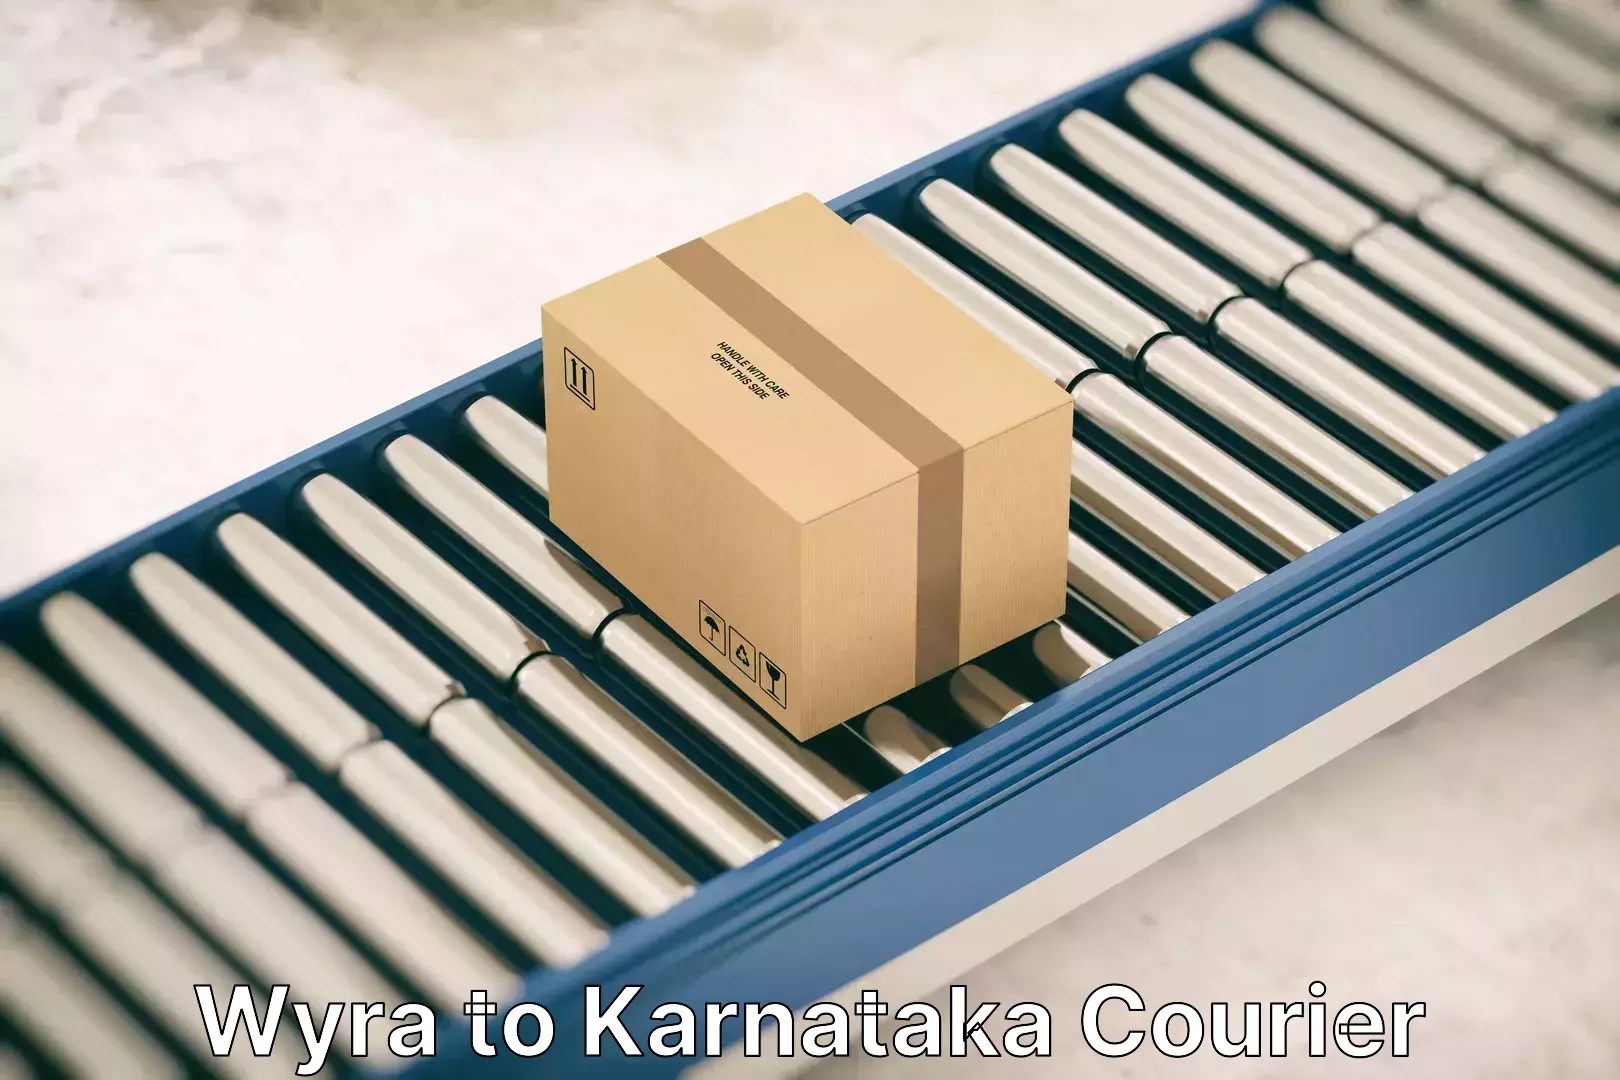 Trusted relocation experts Wyra to Karnataka